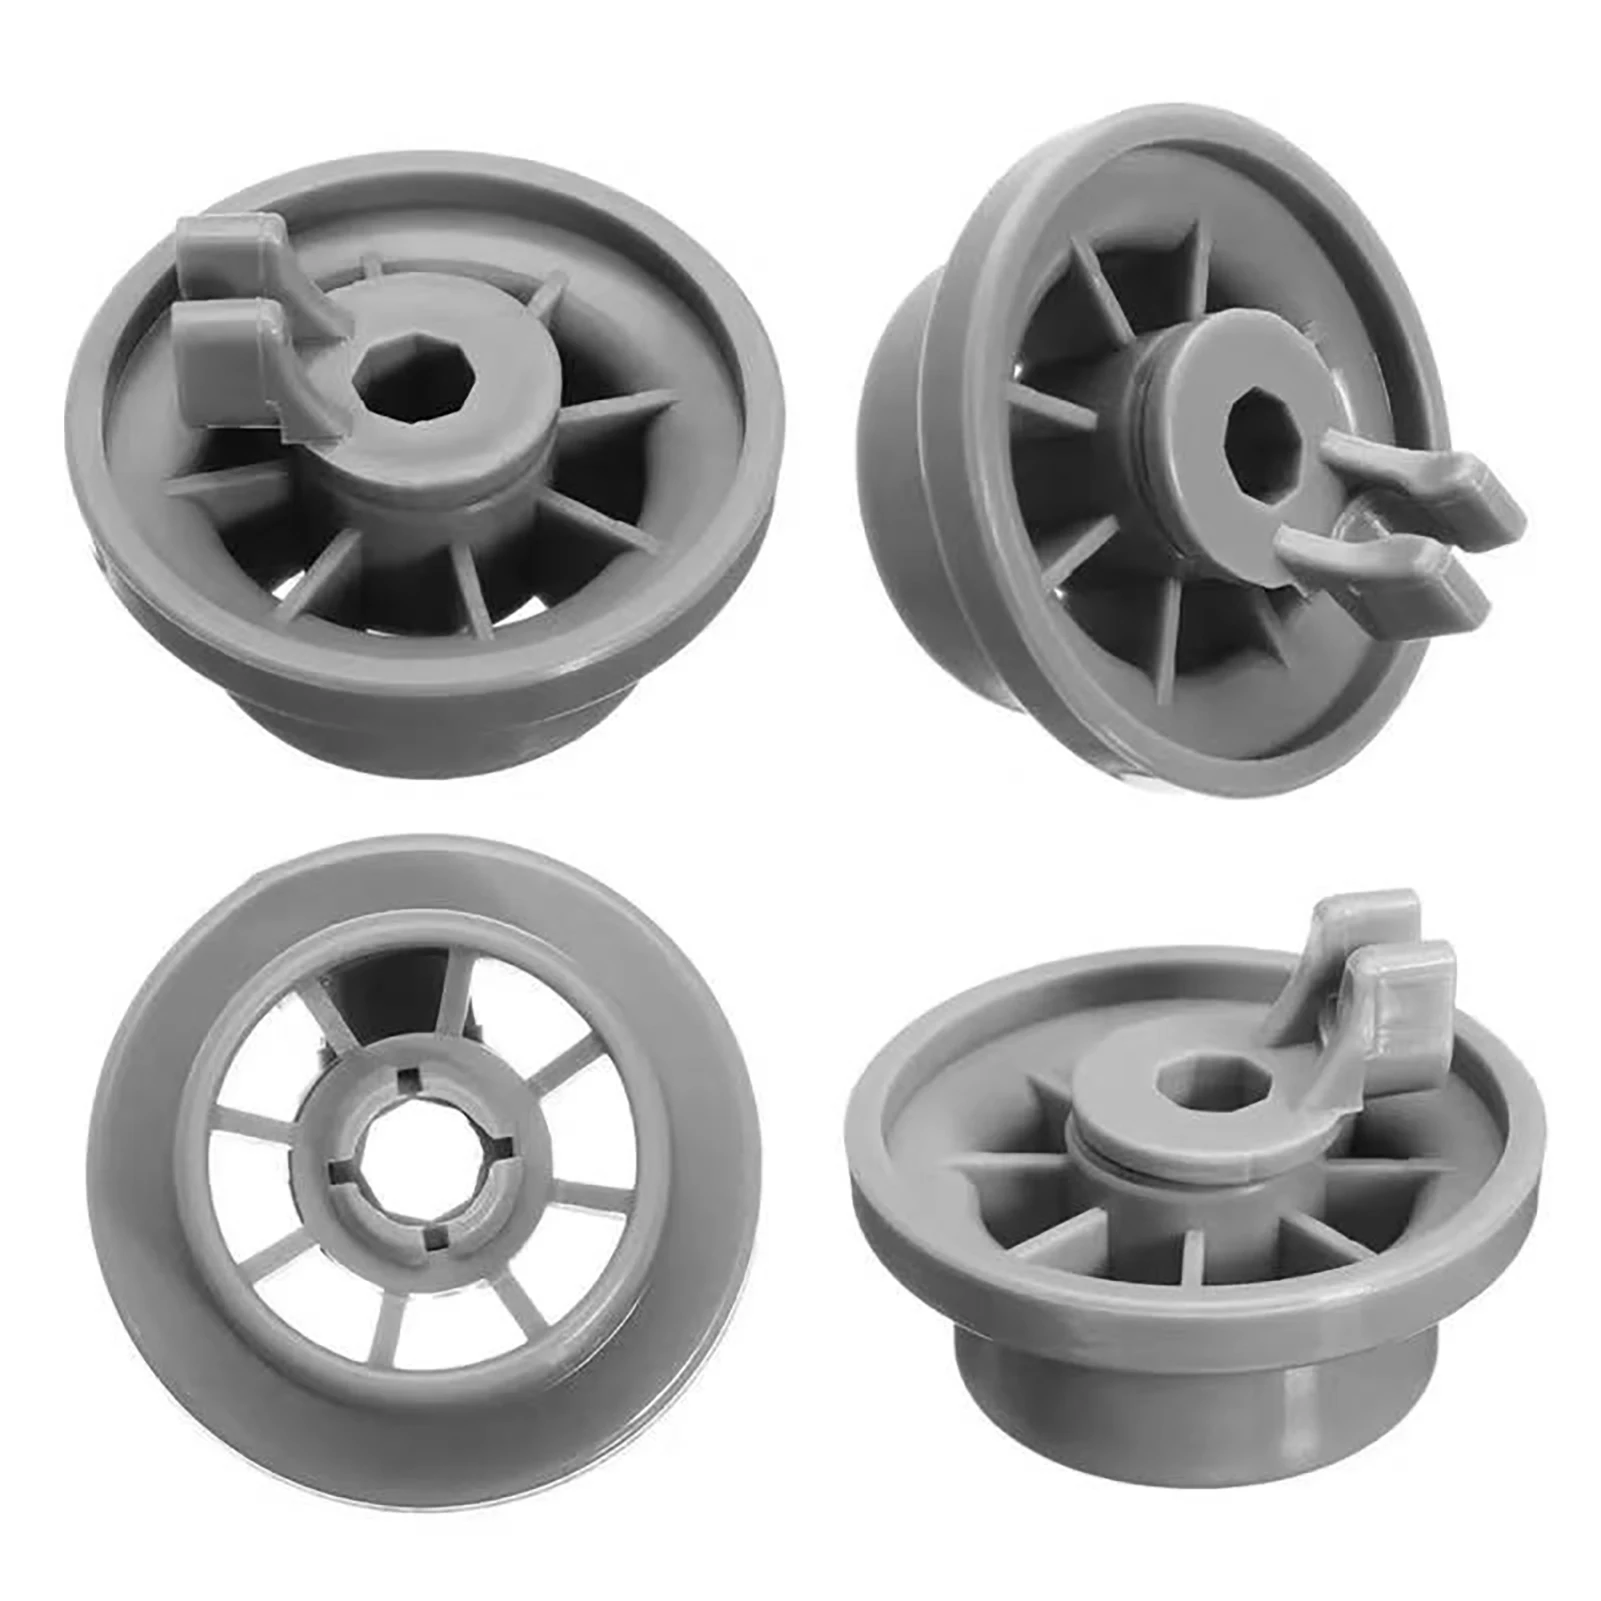 8 X Dishwasher Lower Bottom Basket Roller Wheels For Bosch Neff & Siemens 165314 